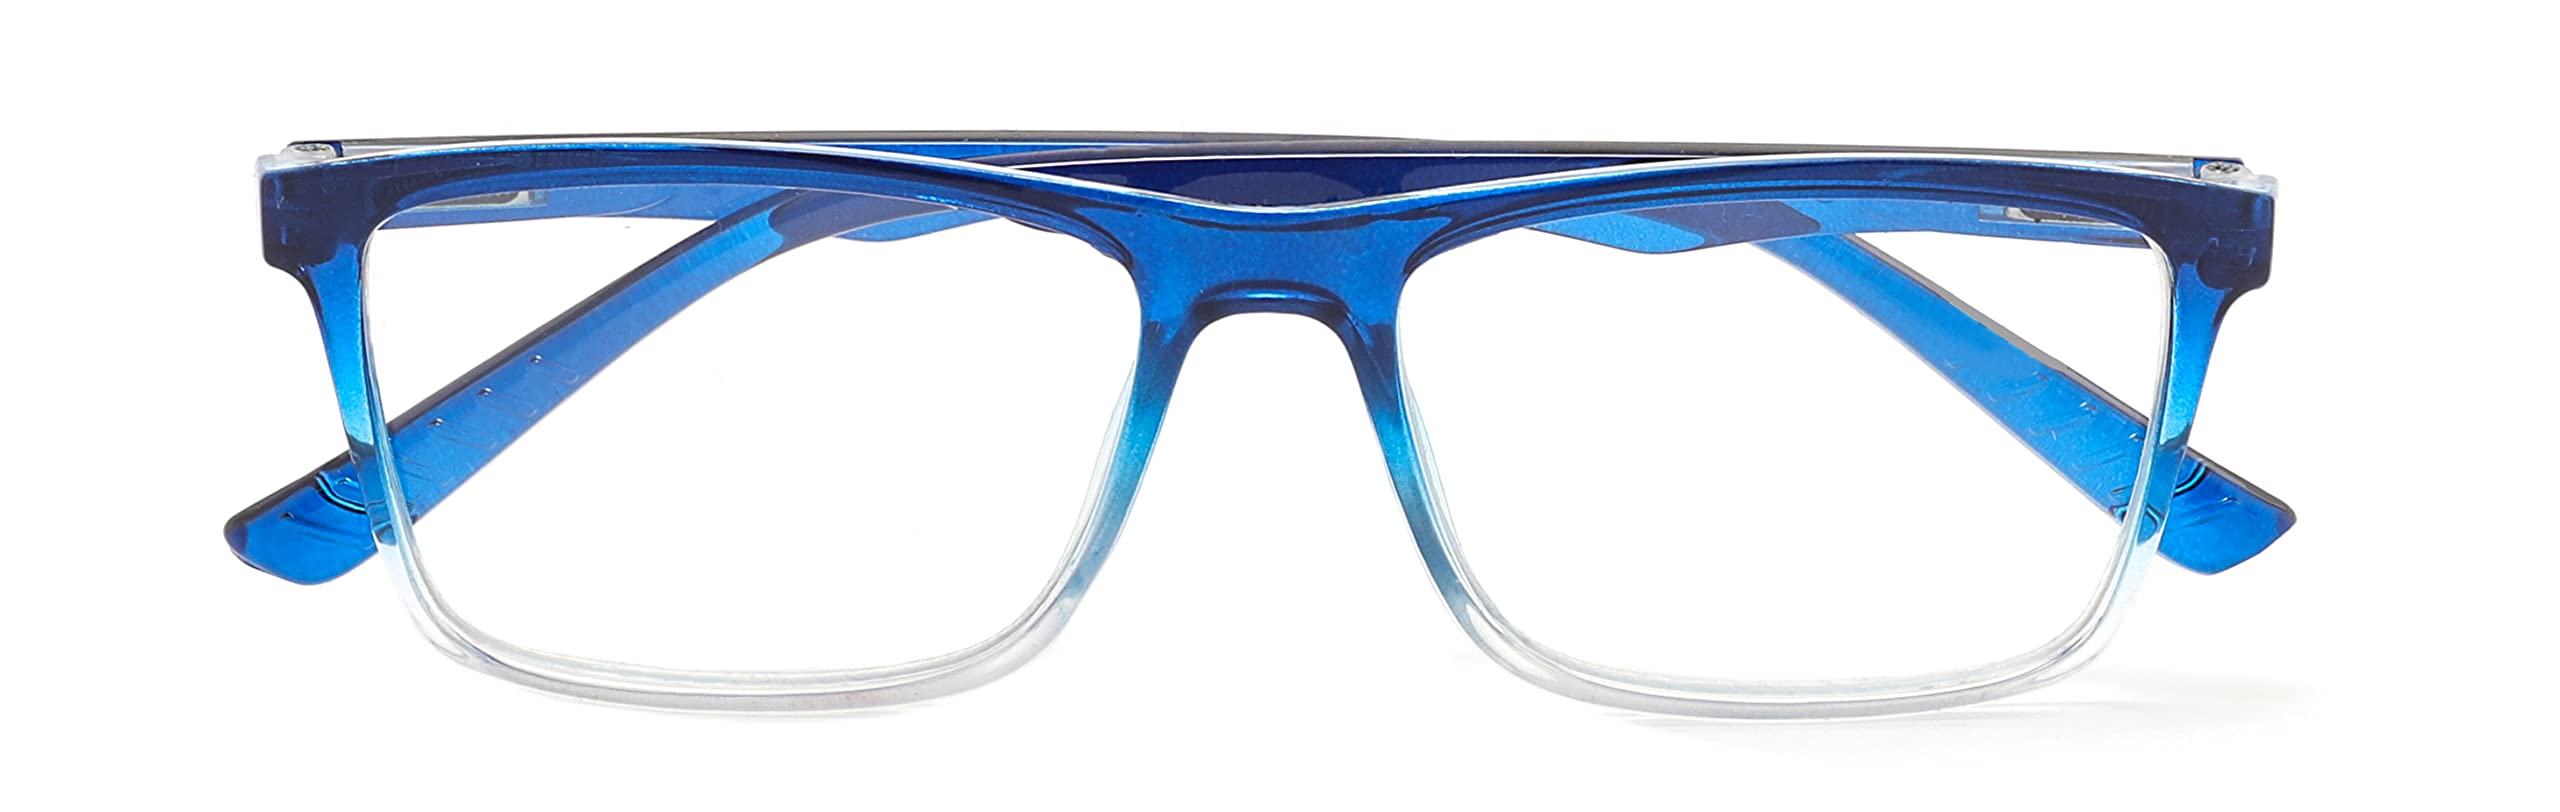 Occhiale da lettura glamour in plastica blu +1,00